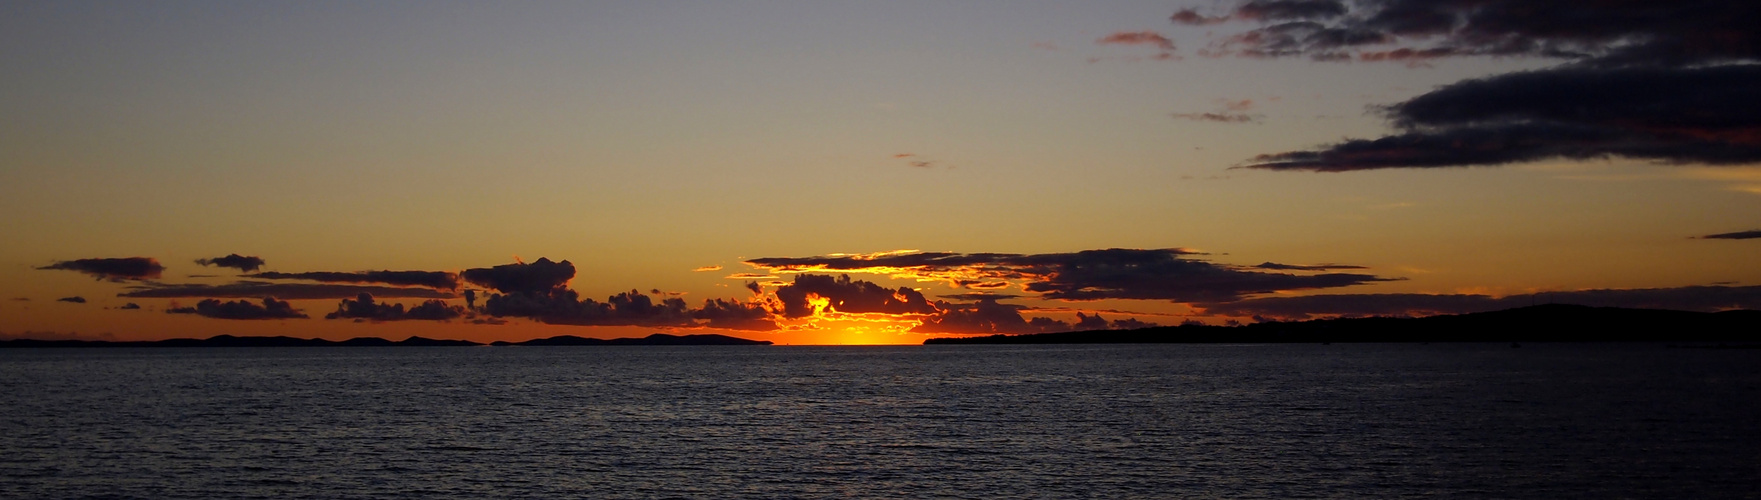 Sonnenuntergang Insel Vir